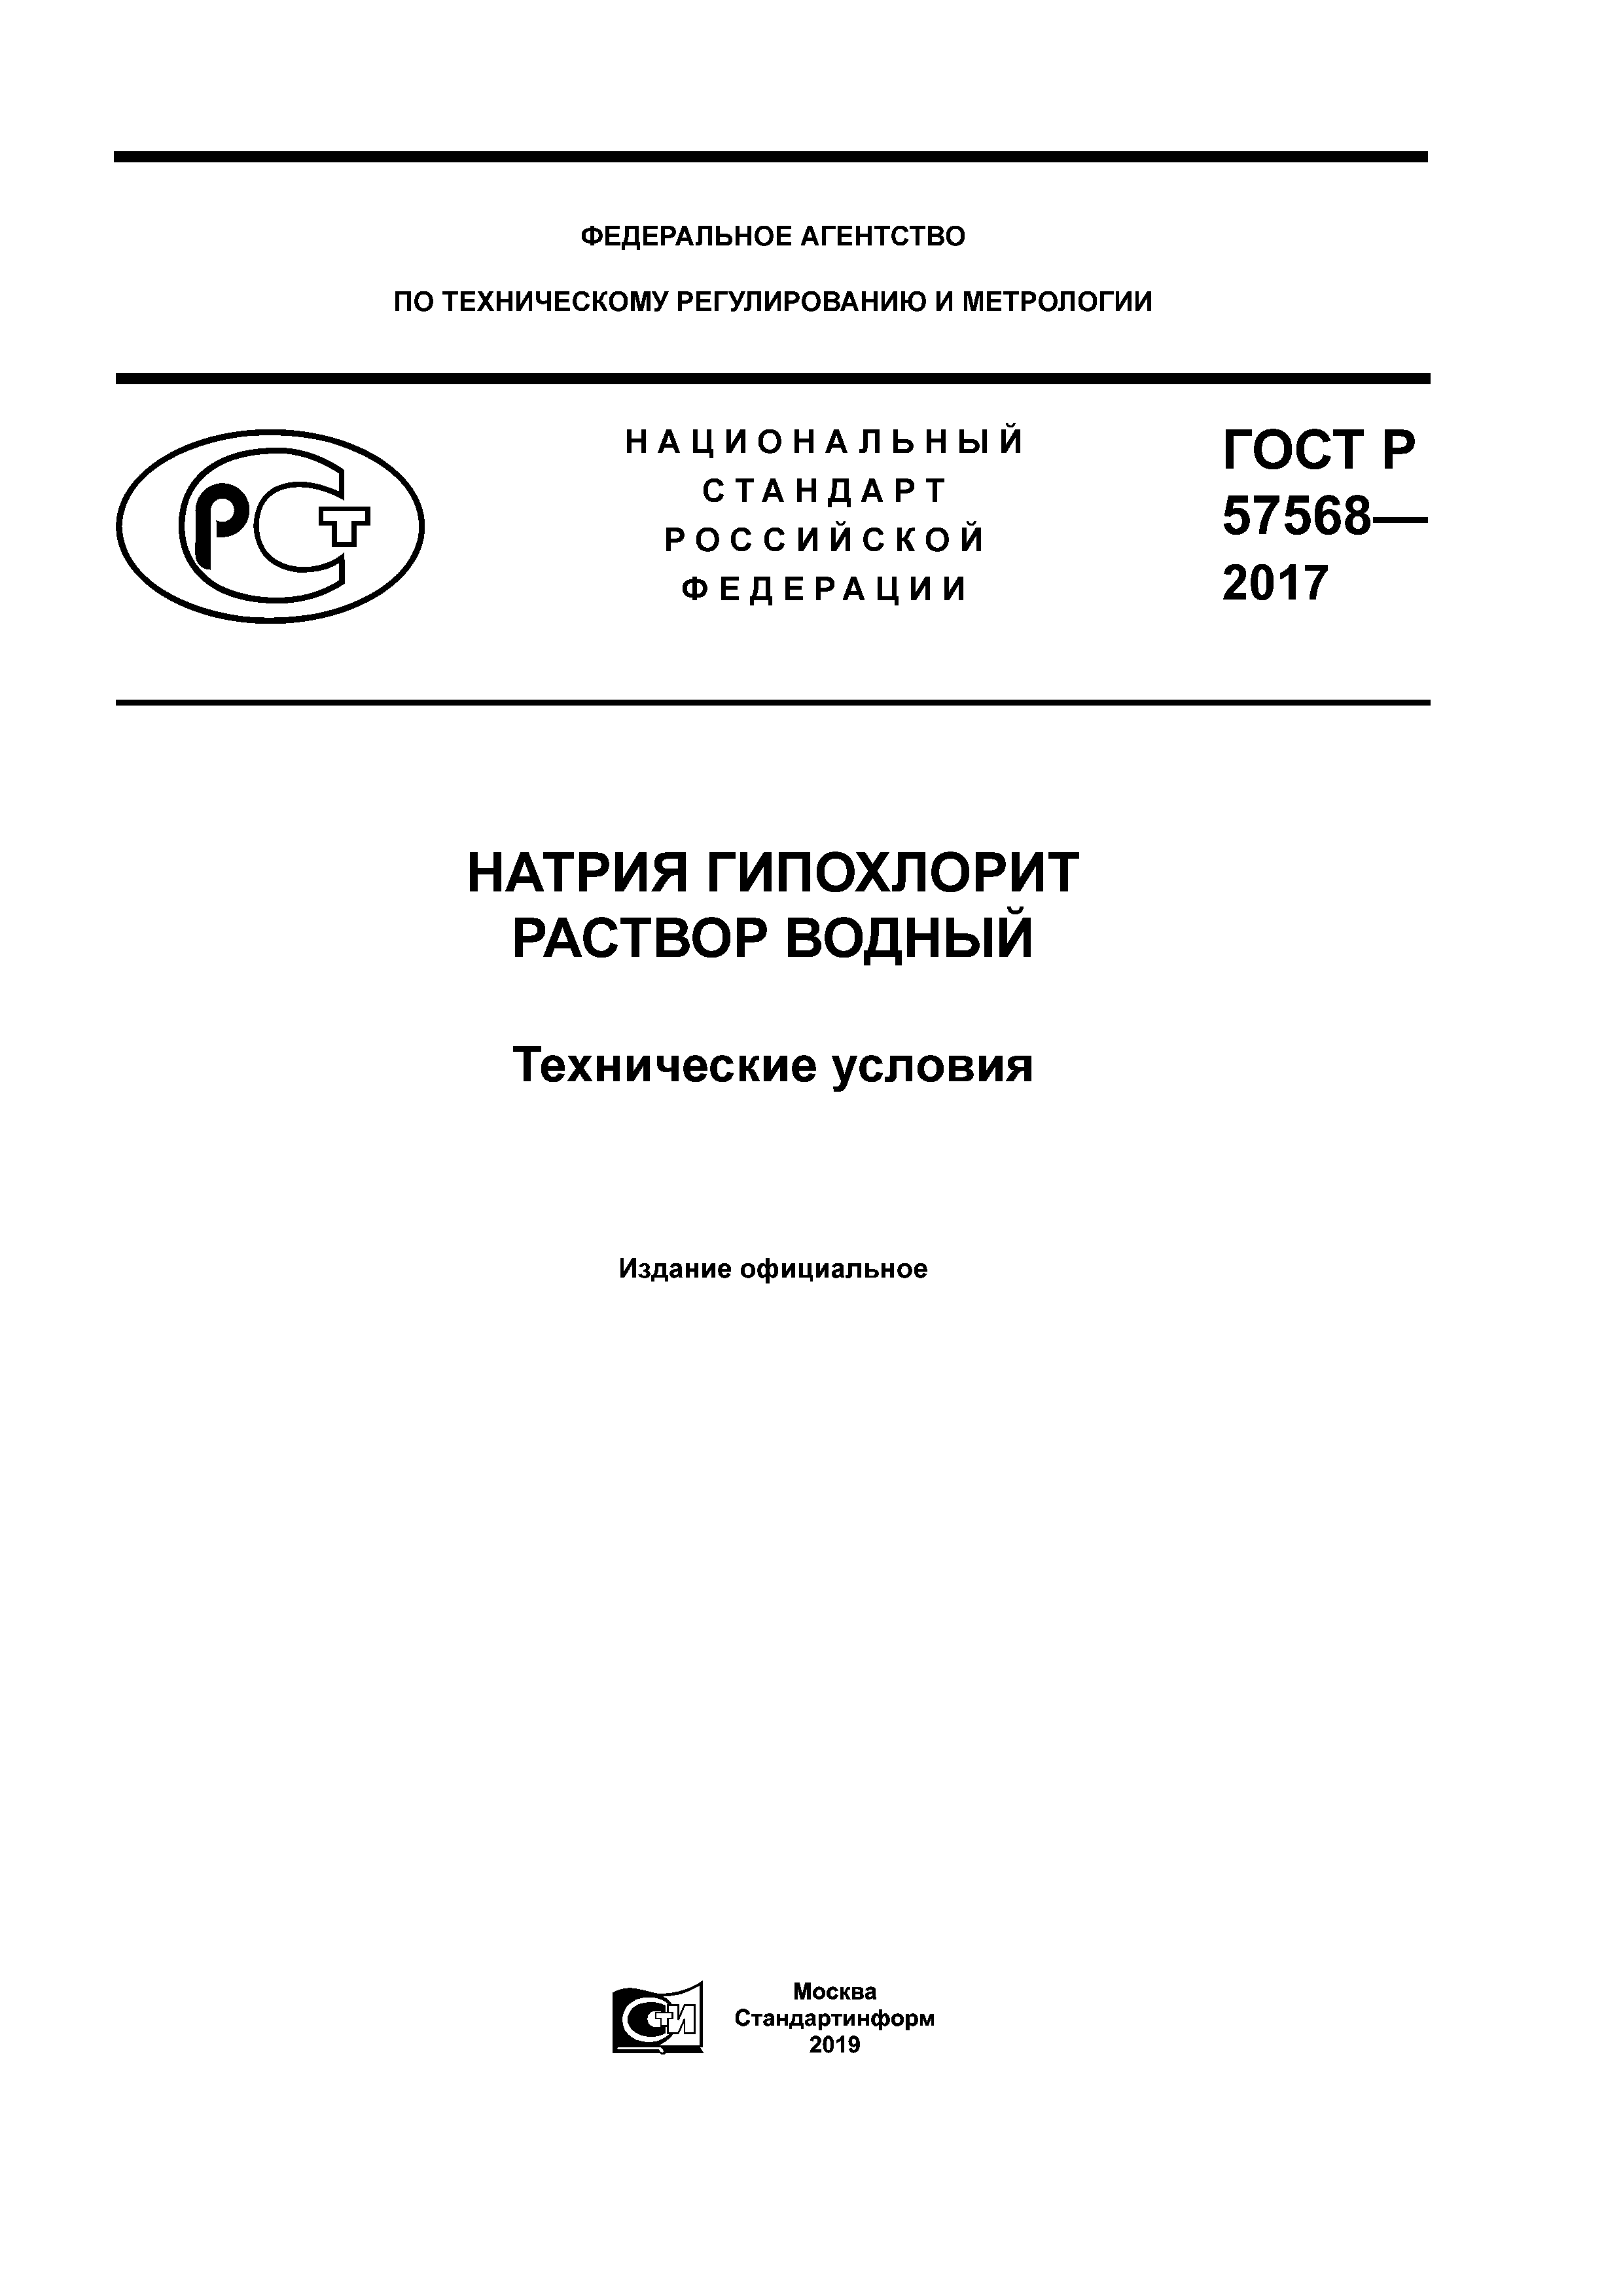 ГОСТ Р 57568-2017